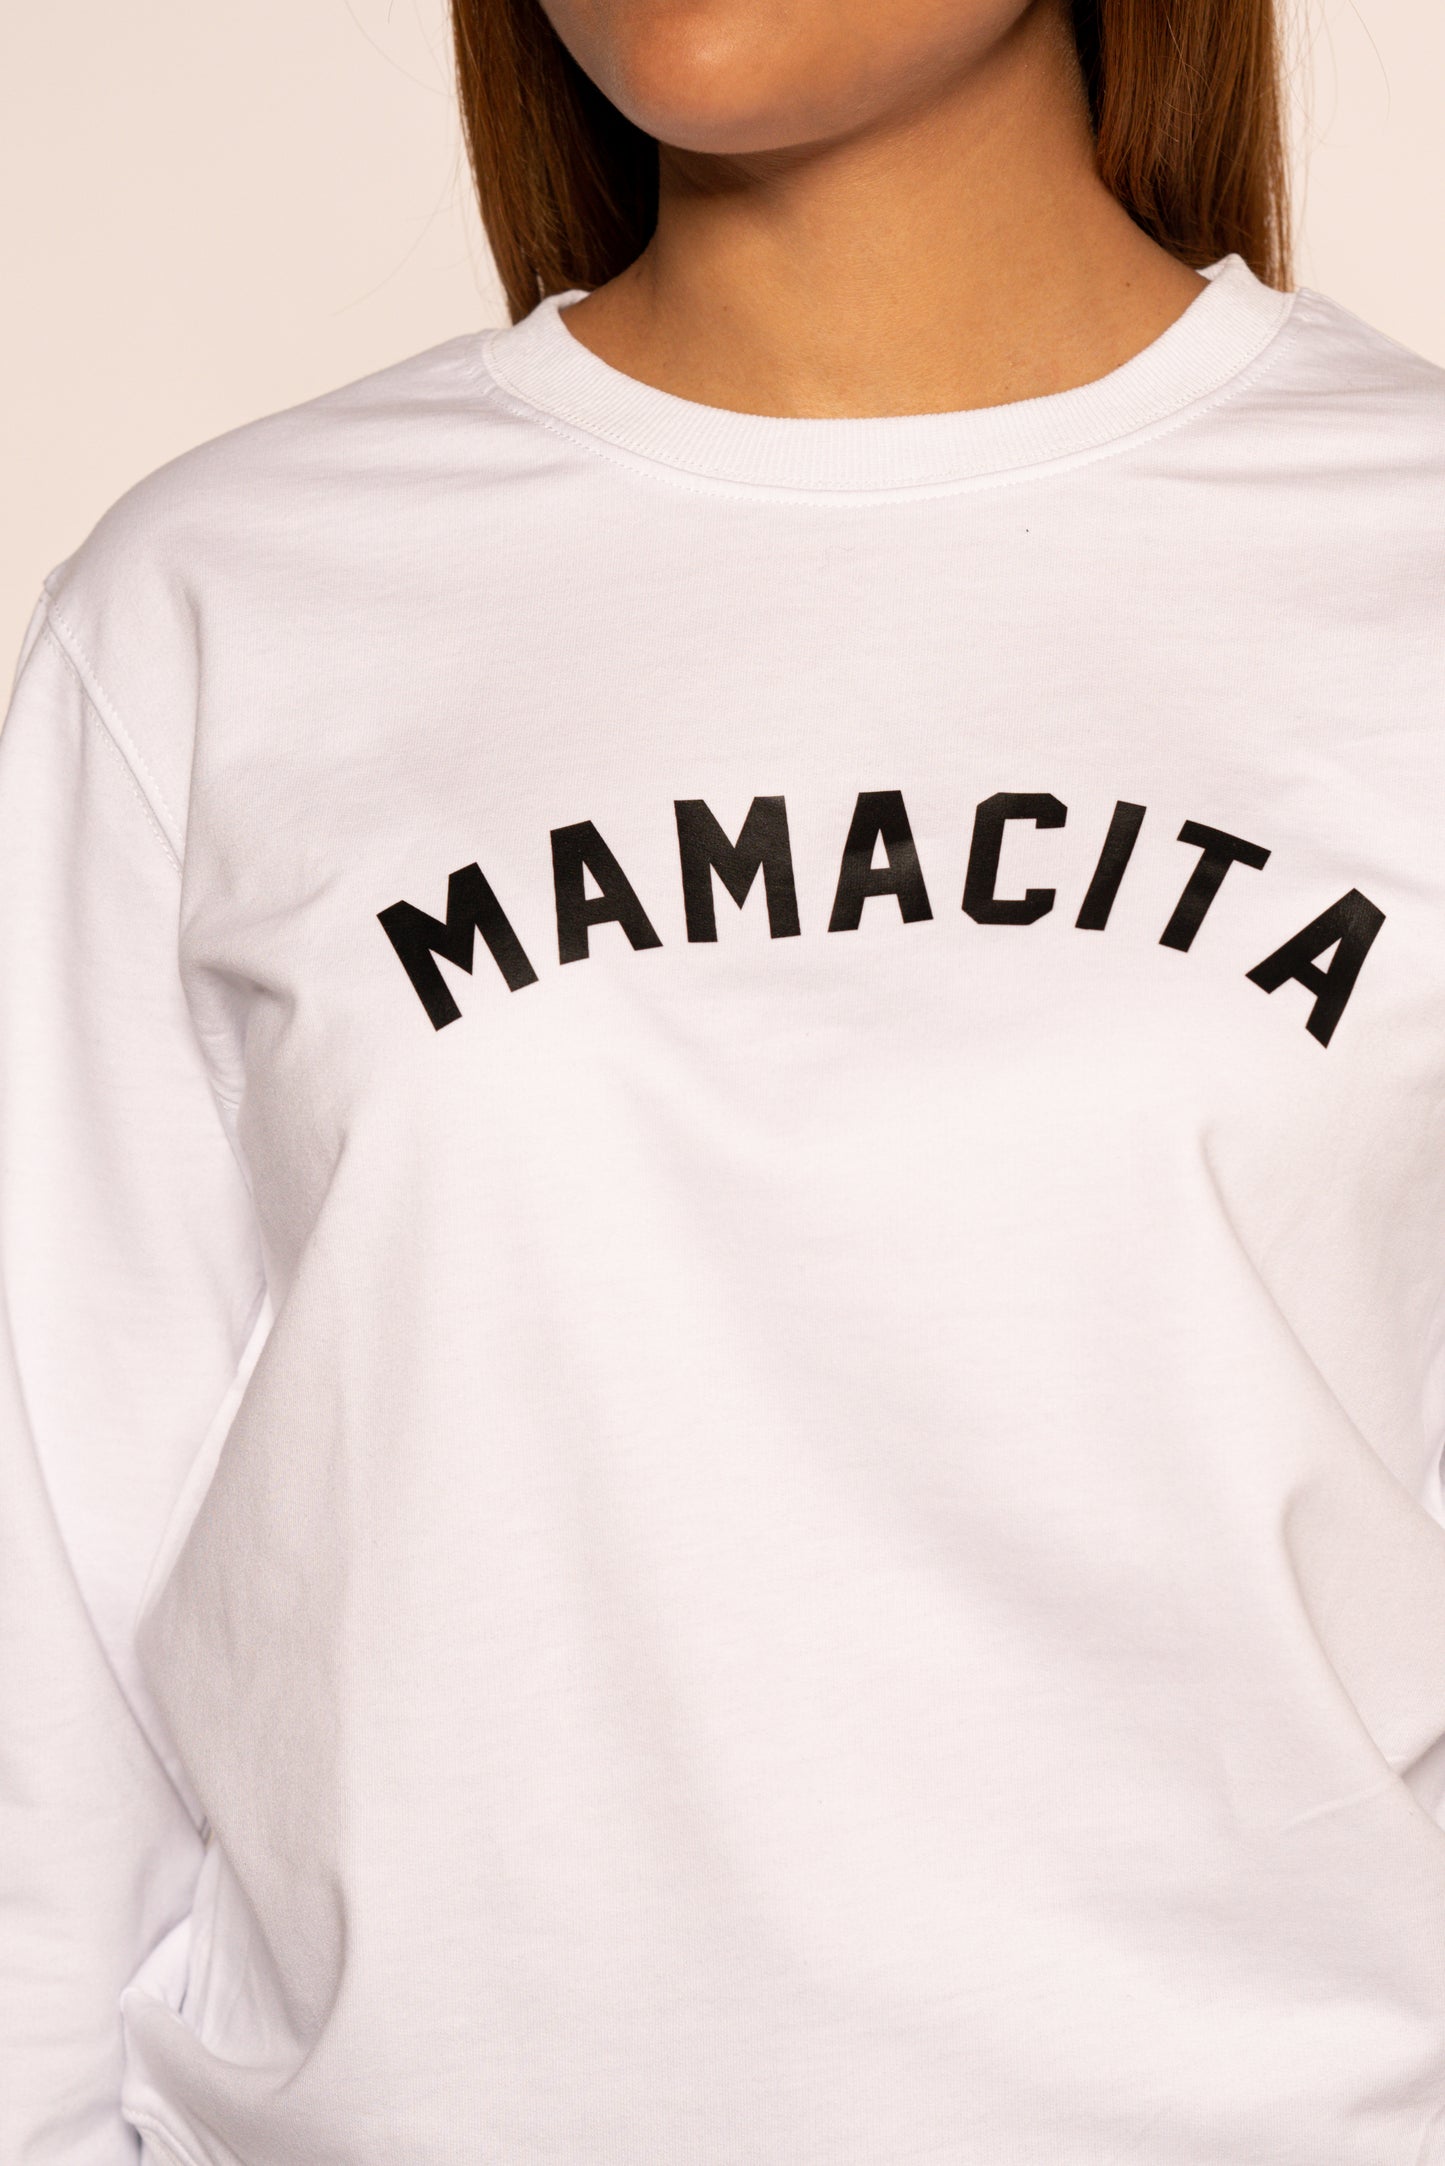 Mamacita Jumper - Classic White